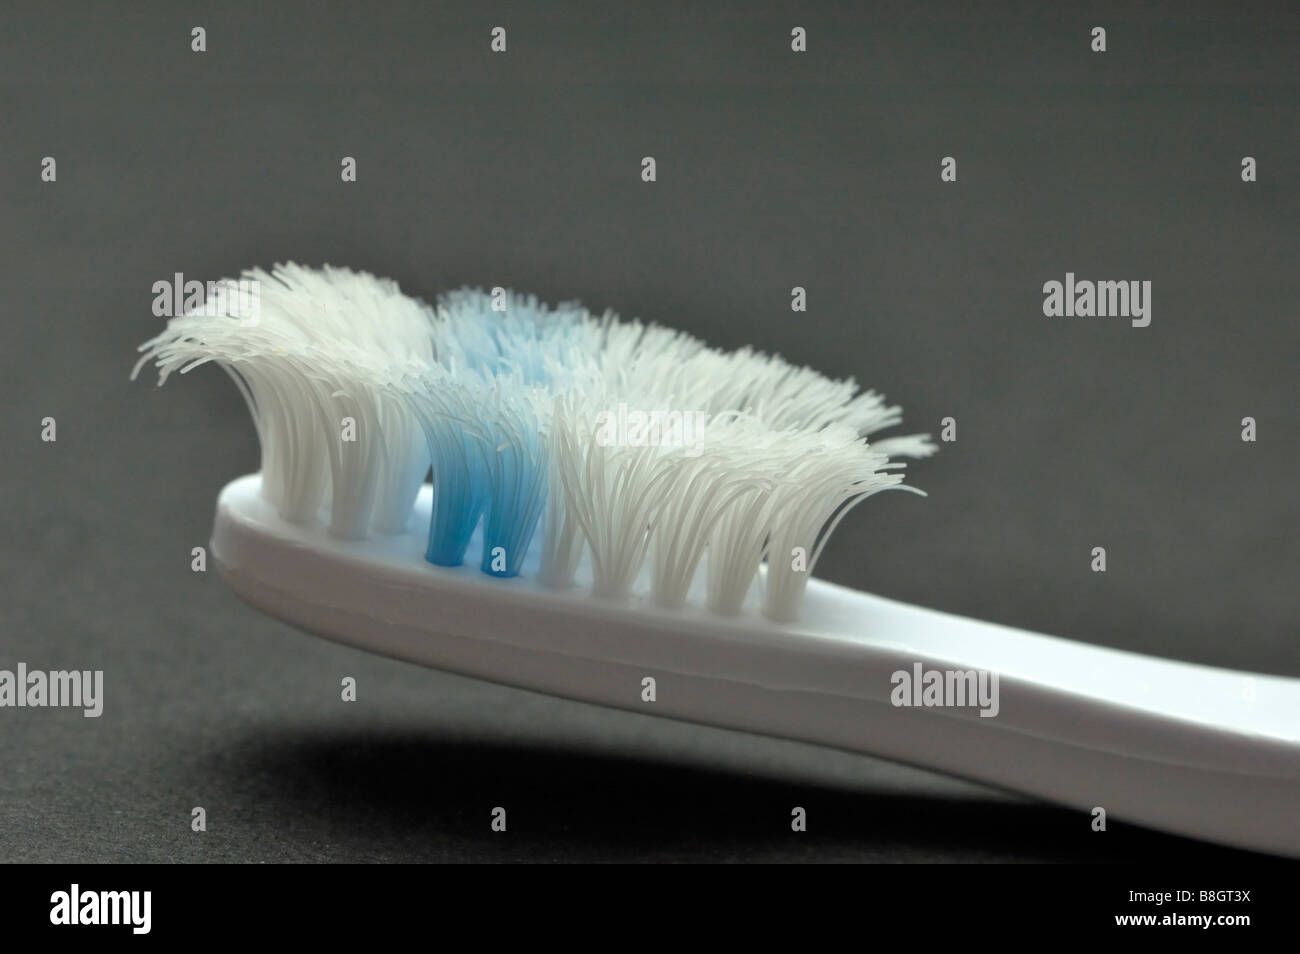 Closeup of a very worn toothbrush Stock Photo